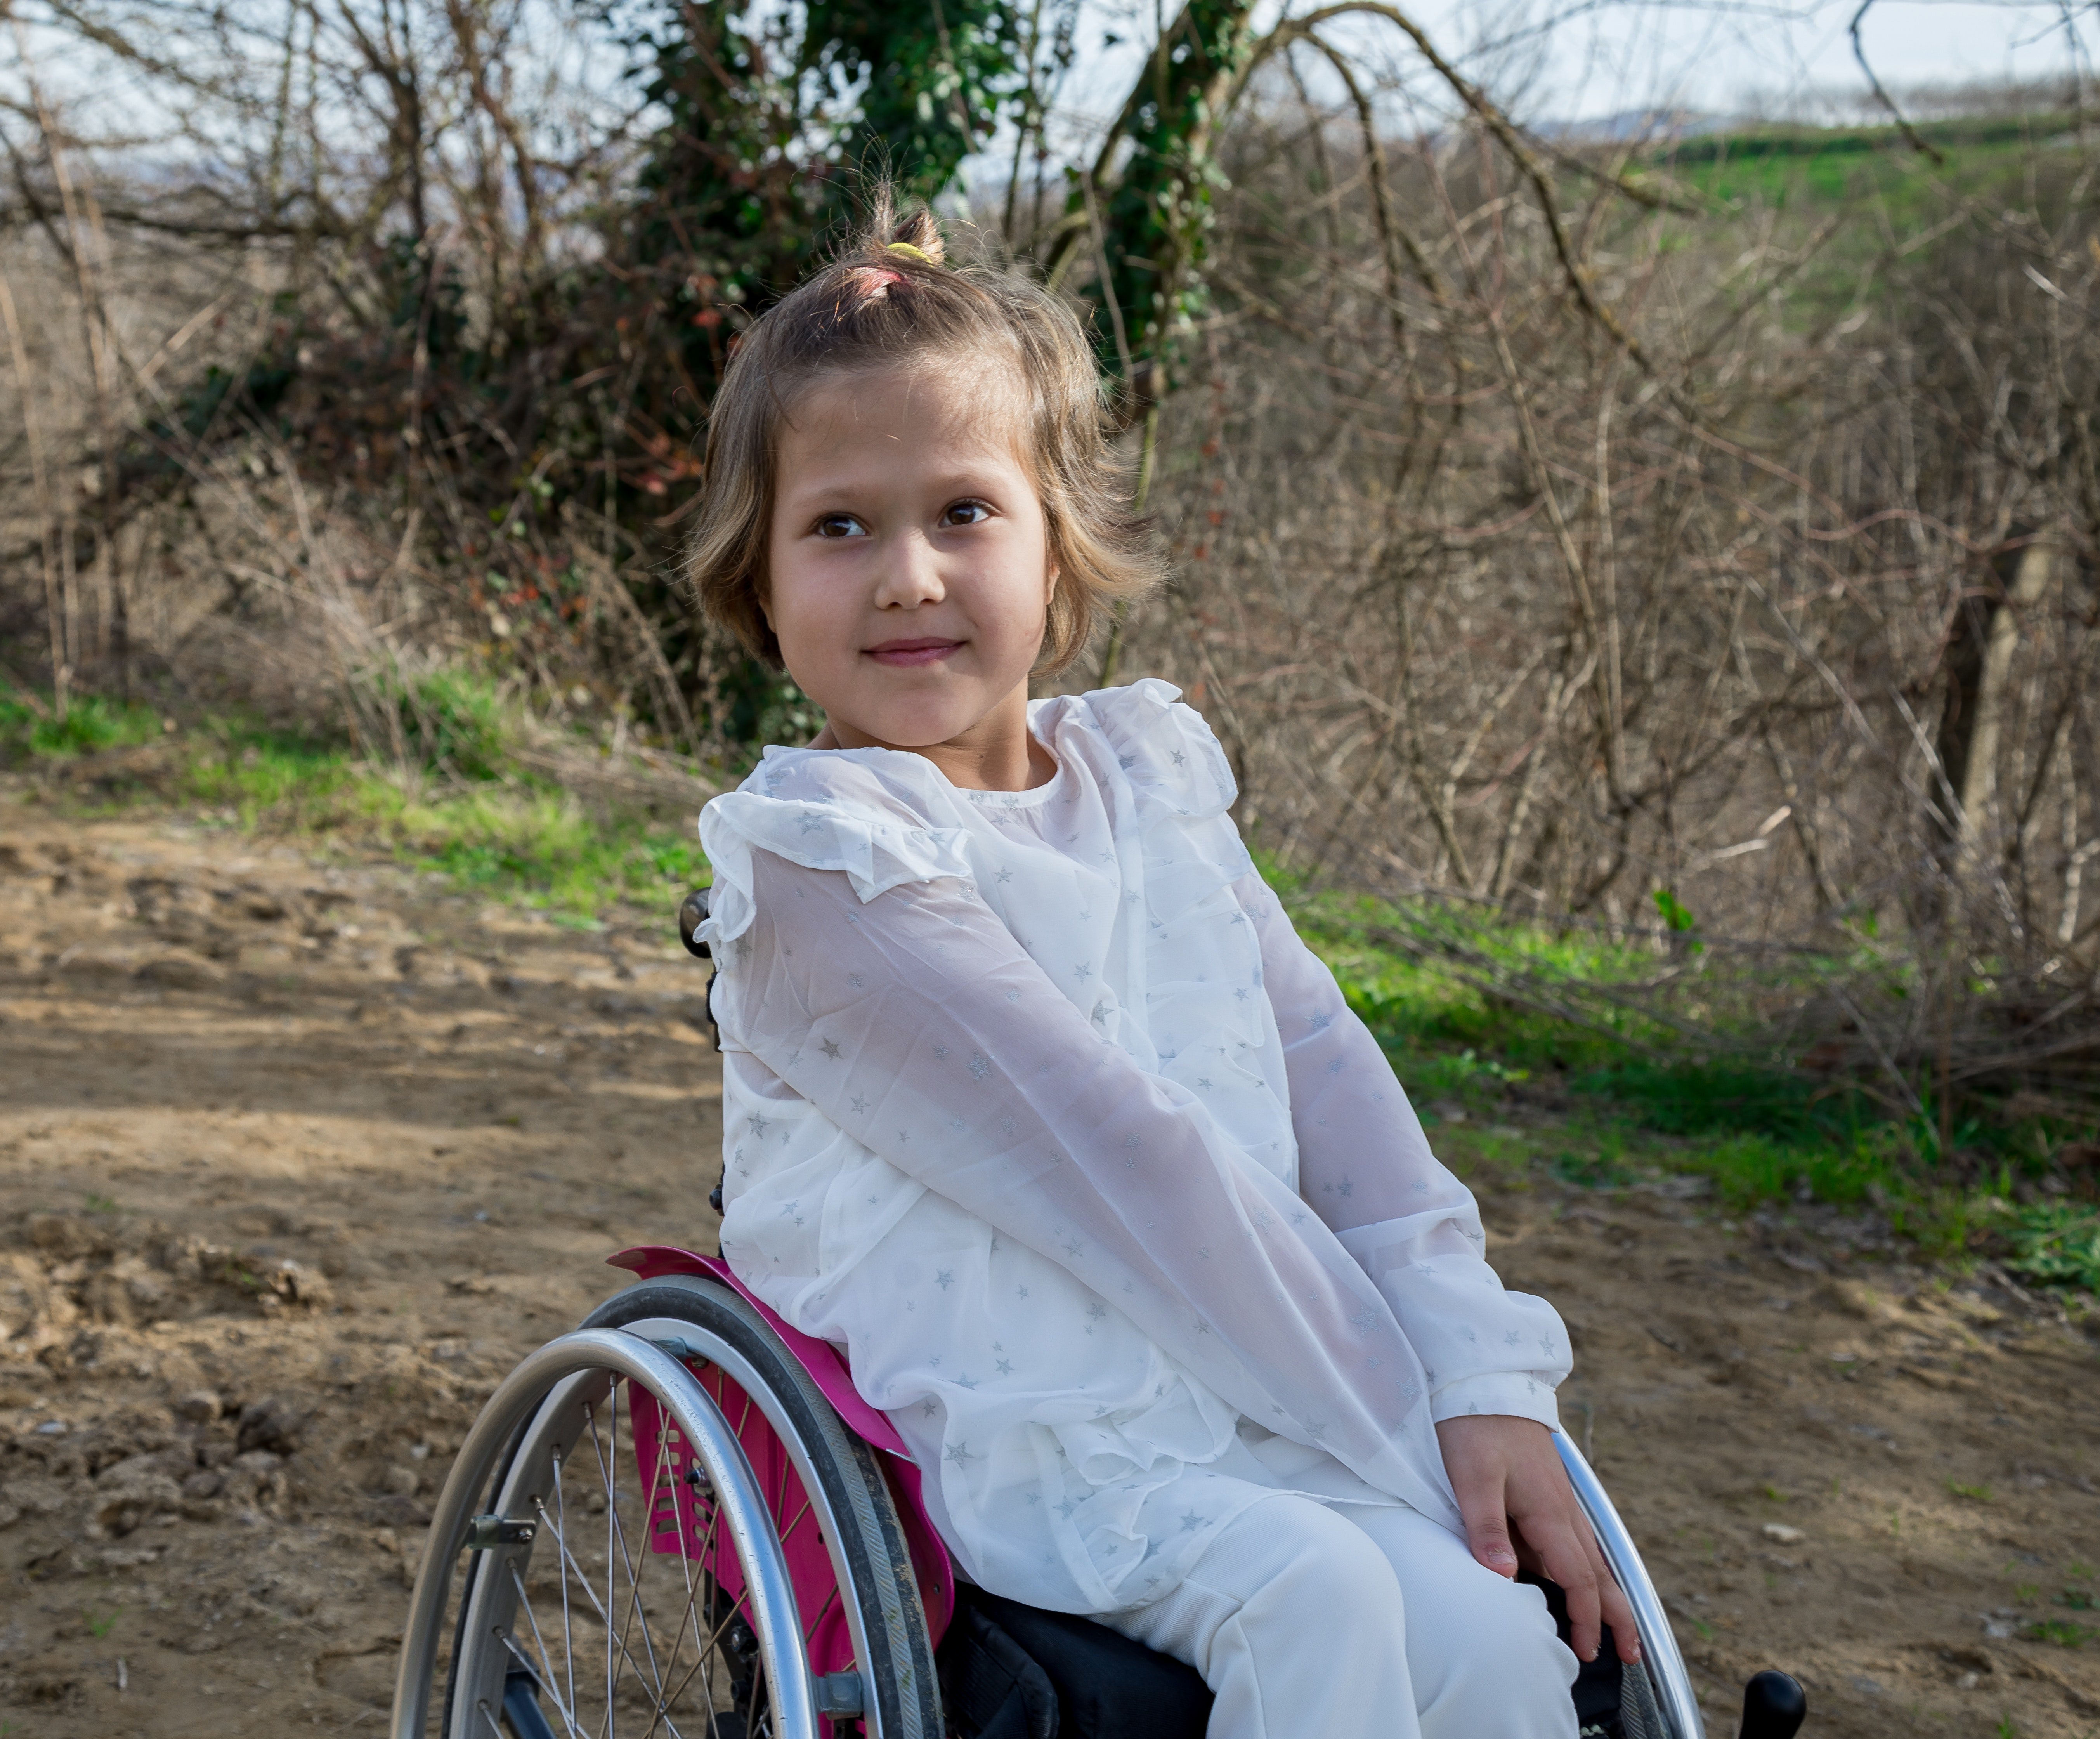 Das junge Mädchen im Rollstuhl lebte bei Frau Murphy. | Quelle: Pexels